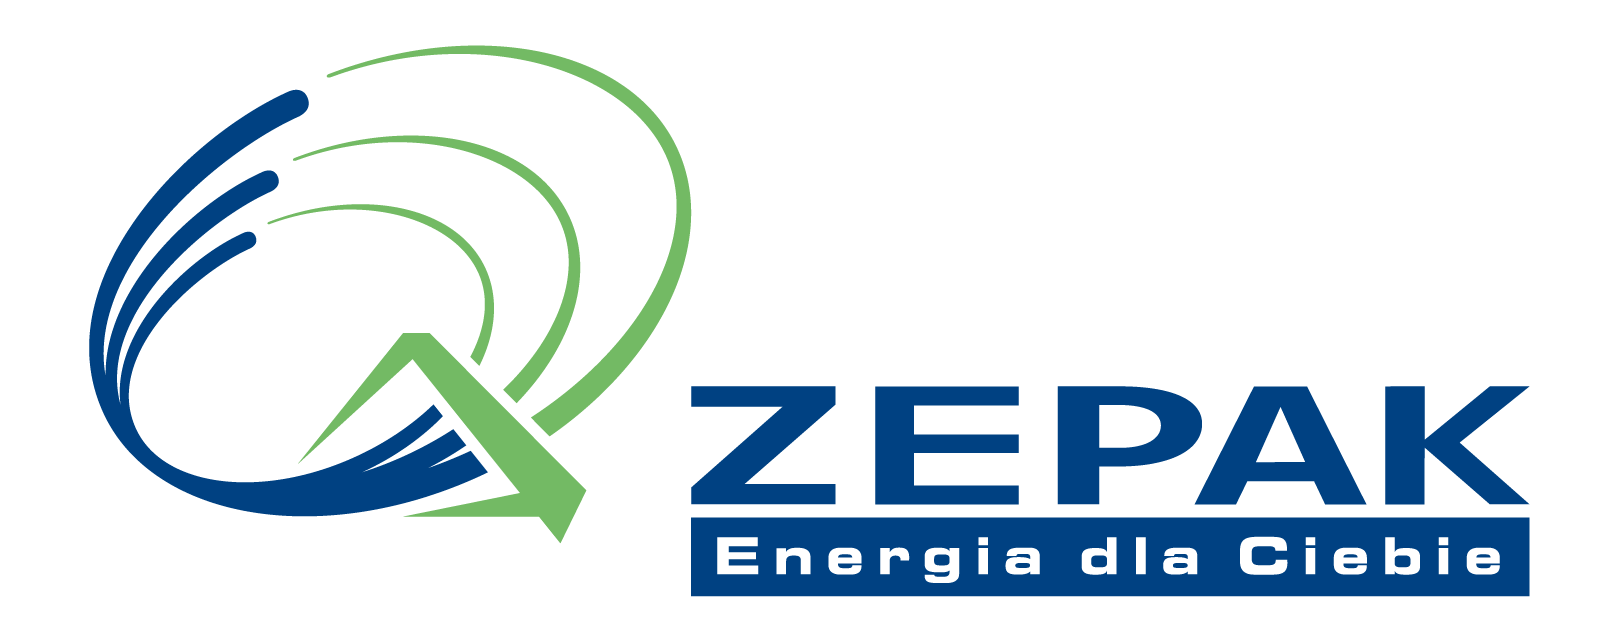 ZE PAK logo